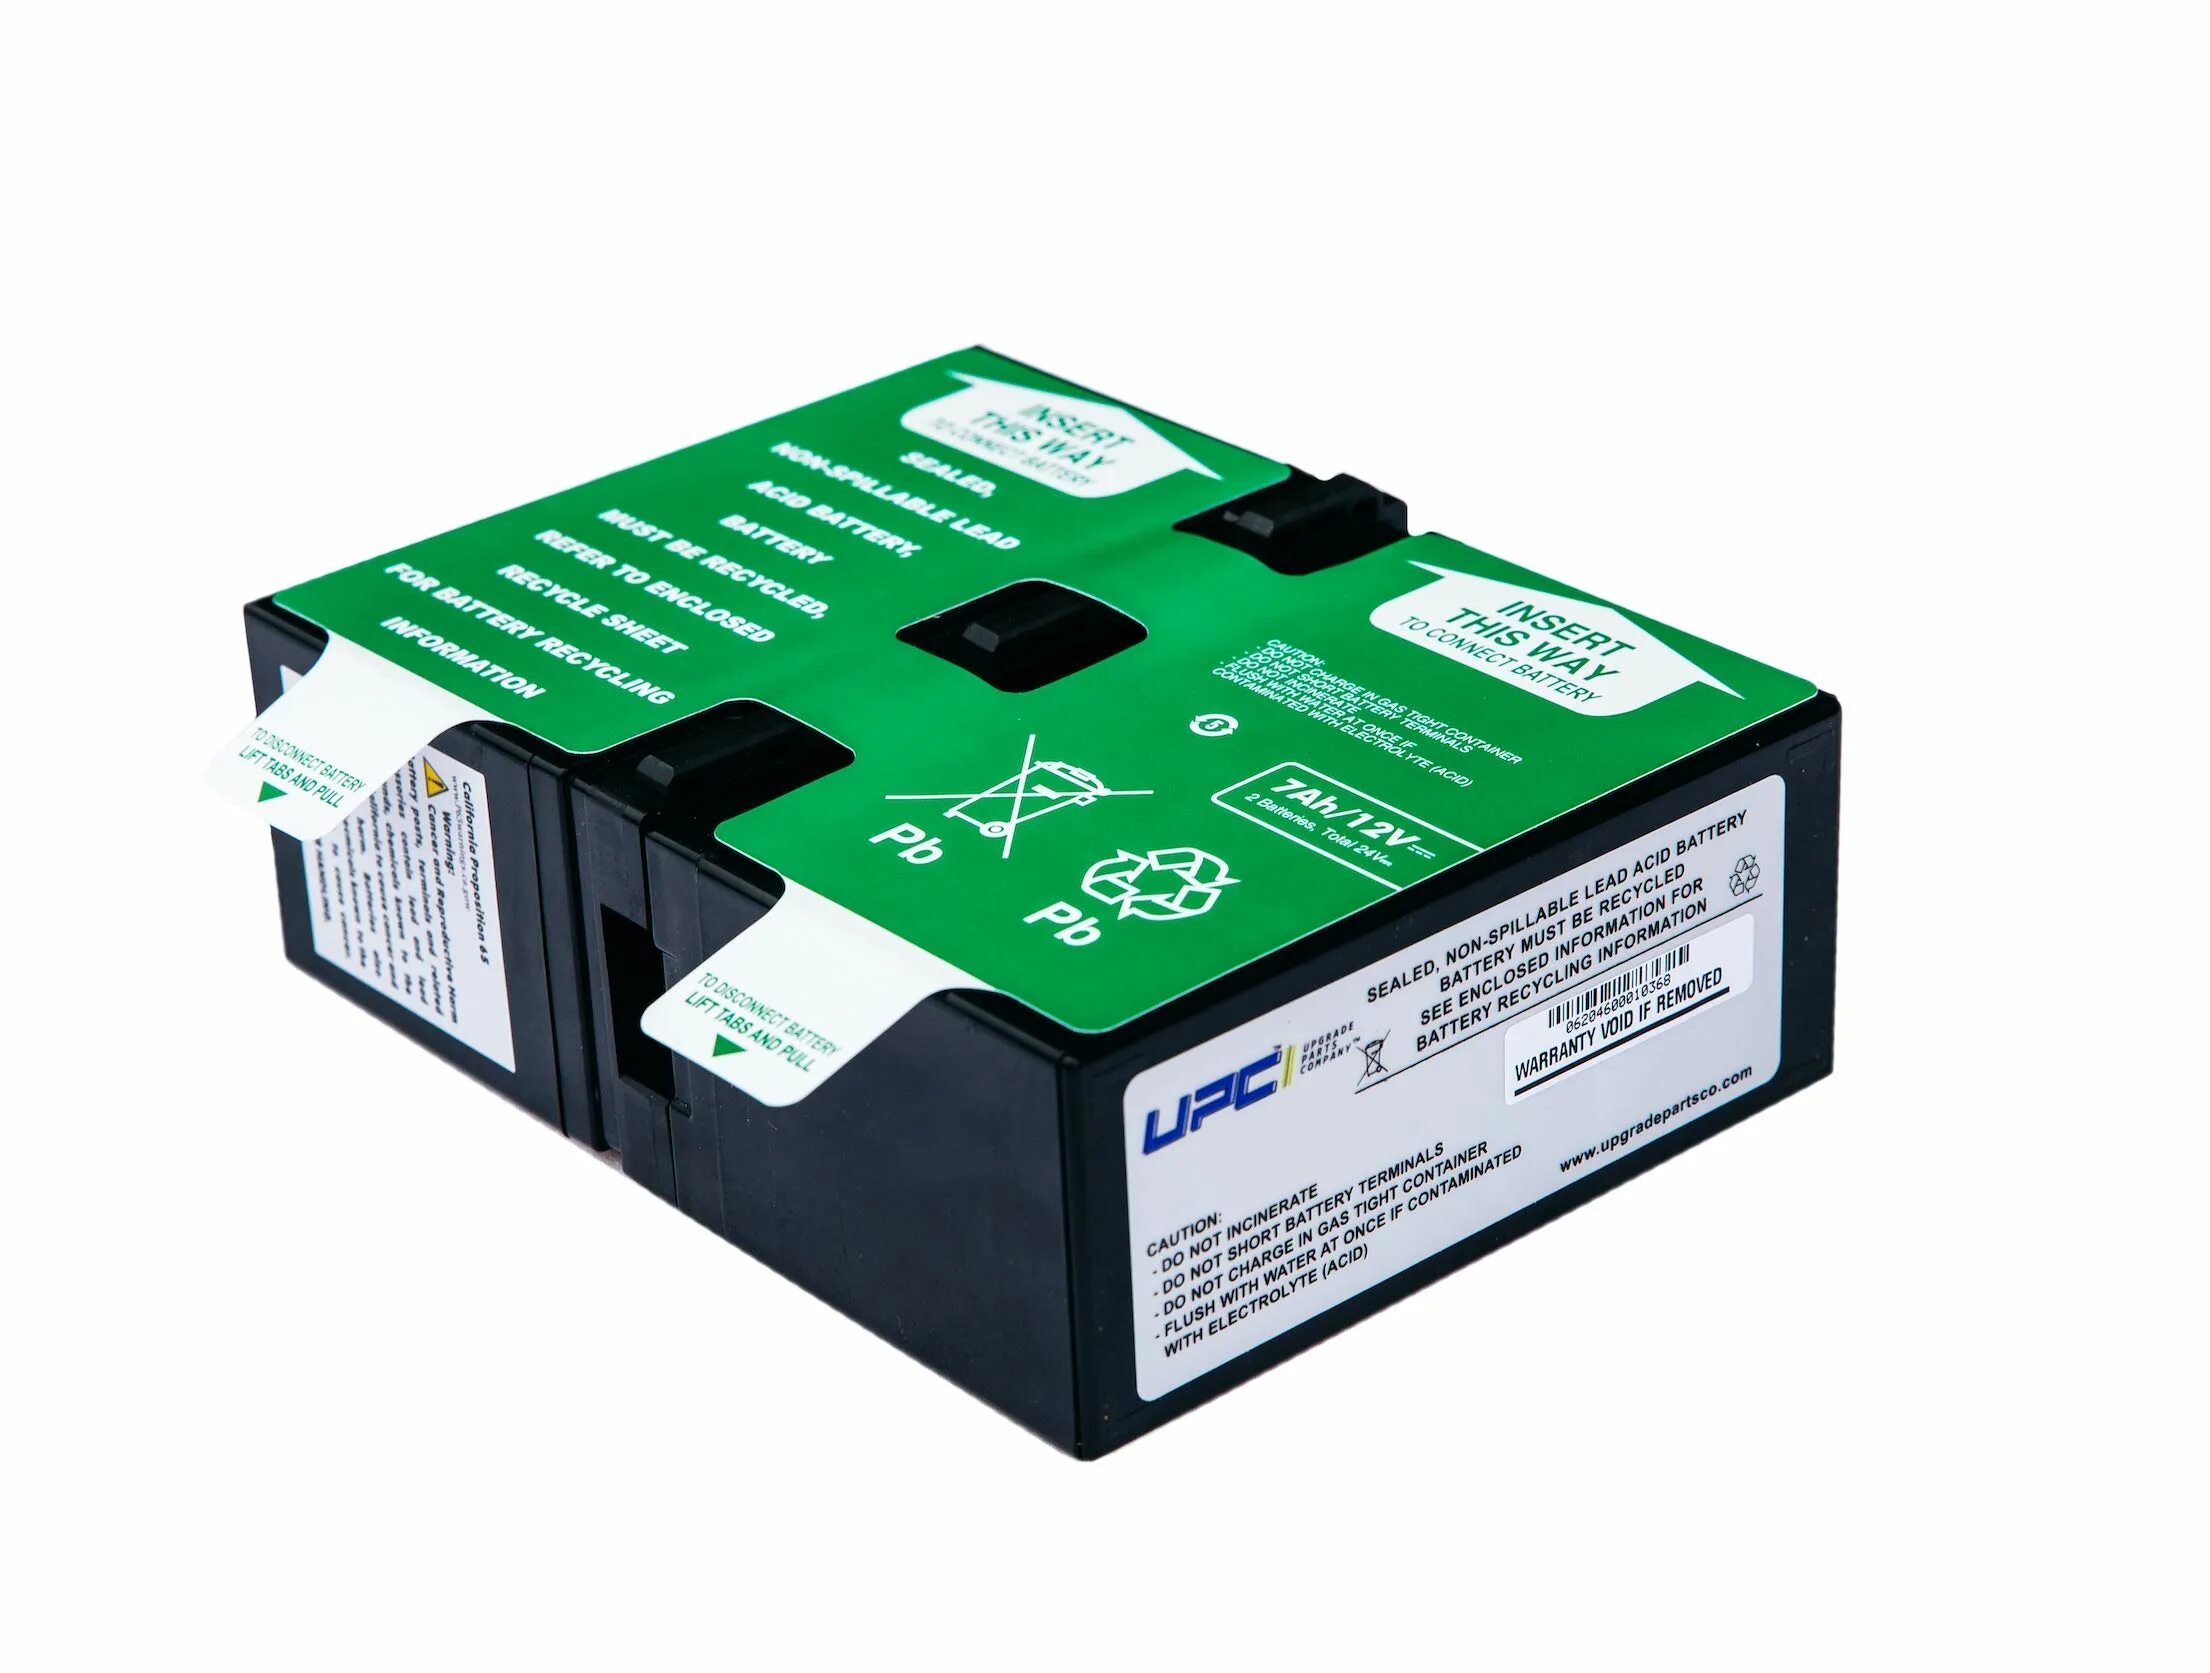 Apc ups 1000 аккумулятор. APC Replacement Battery Cartridge #124. APC apcrbc141. APC by Schneider Electric apcrbc123. APC RS rbc32.